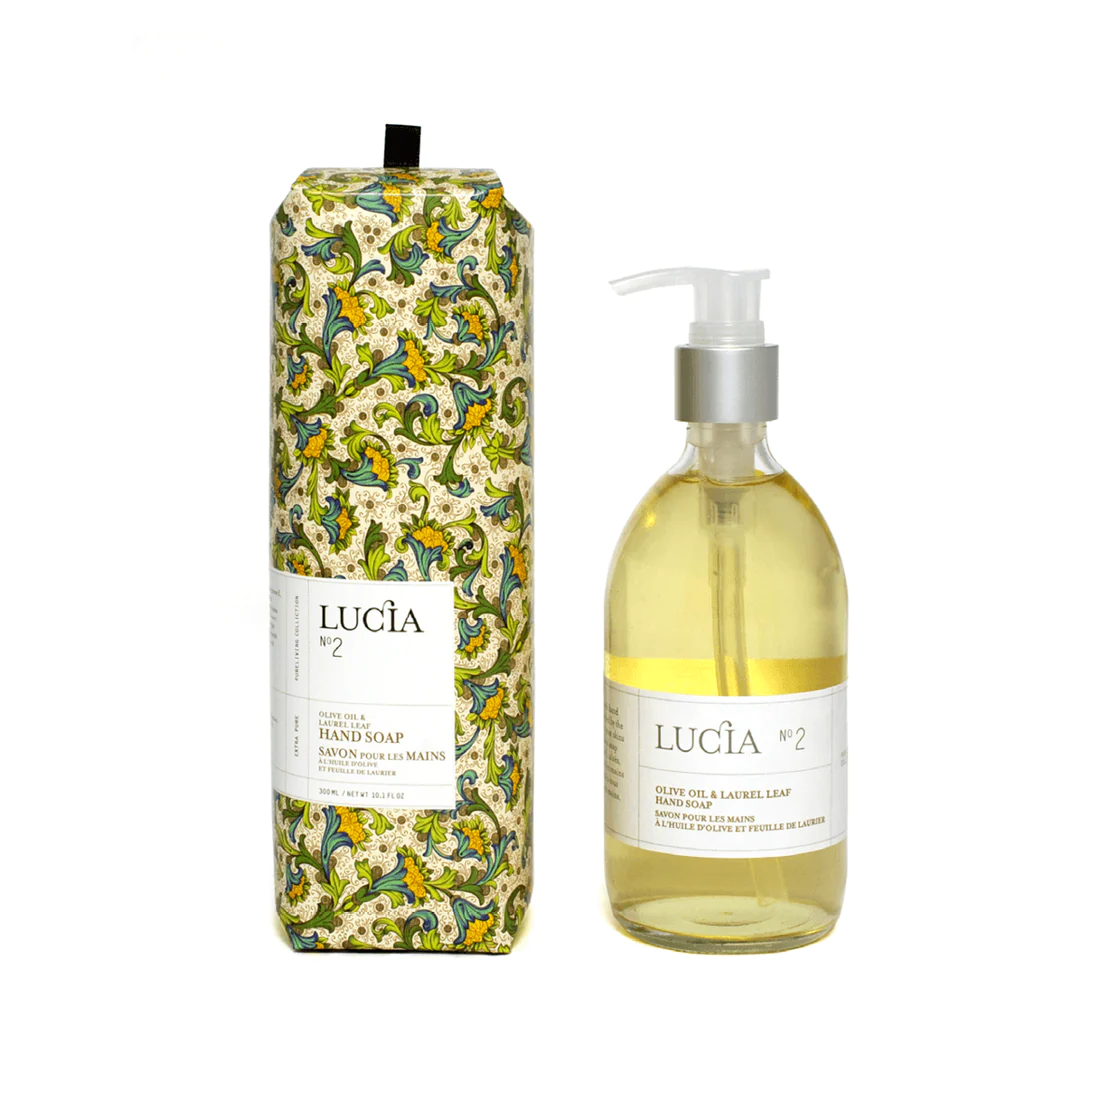 olive oil and laurel leaf hand soap